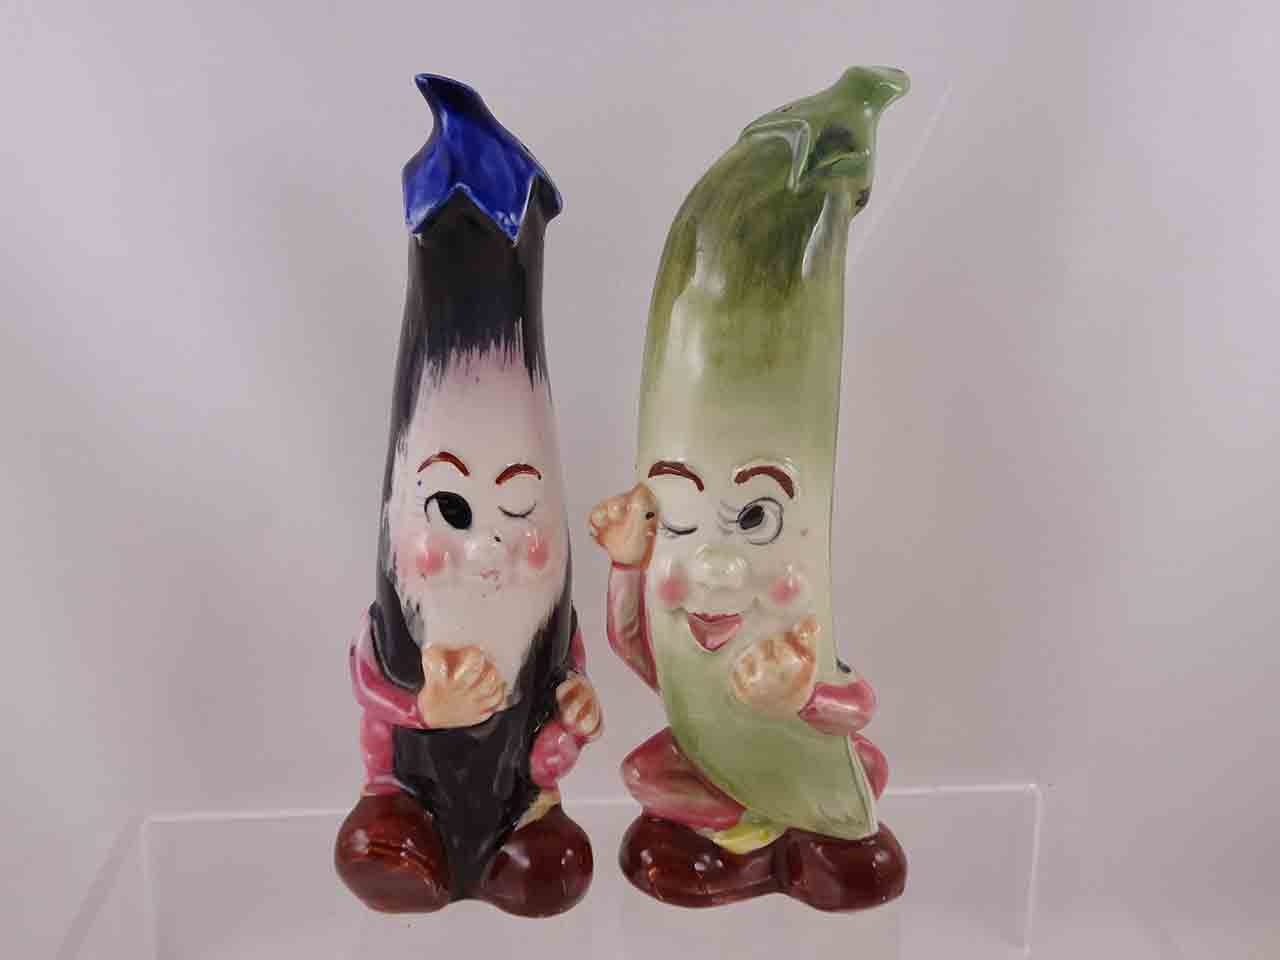 Anthropomorphic tall vegetable salt and pepper shakers - eggplant & pea pod